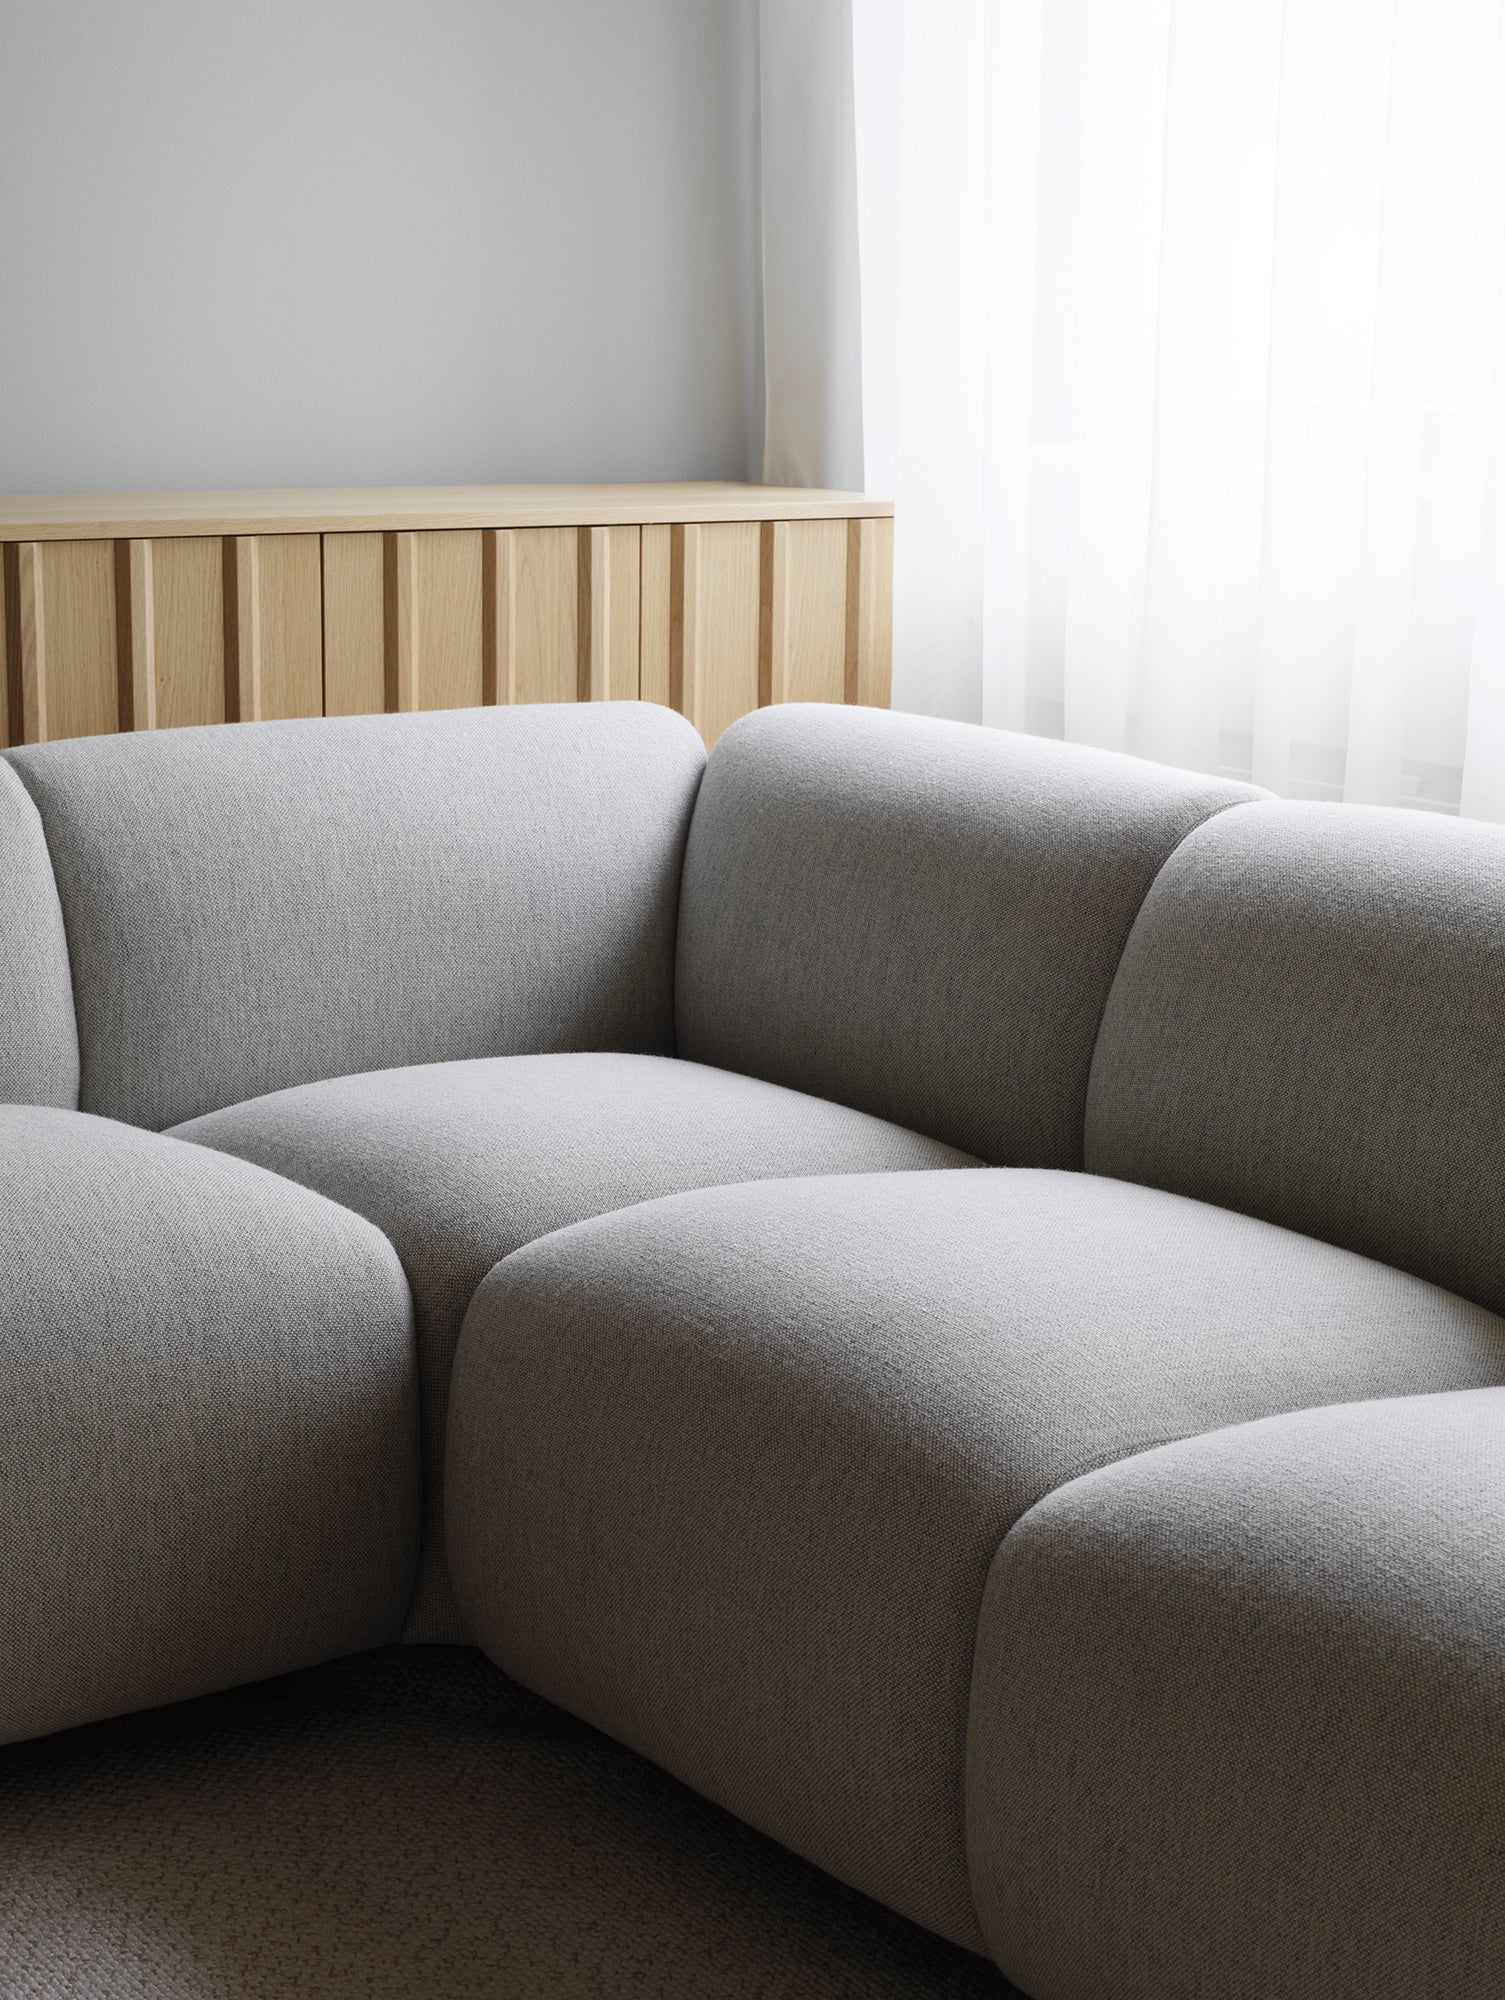 Swell Modular Sofa by Normann Copenhagen / Hallingdal 65 110